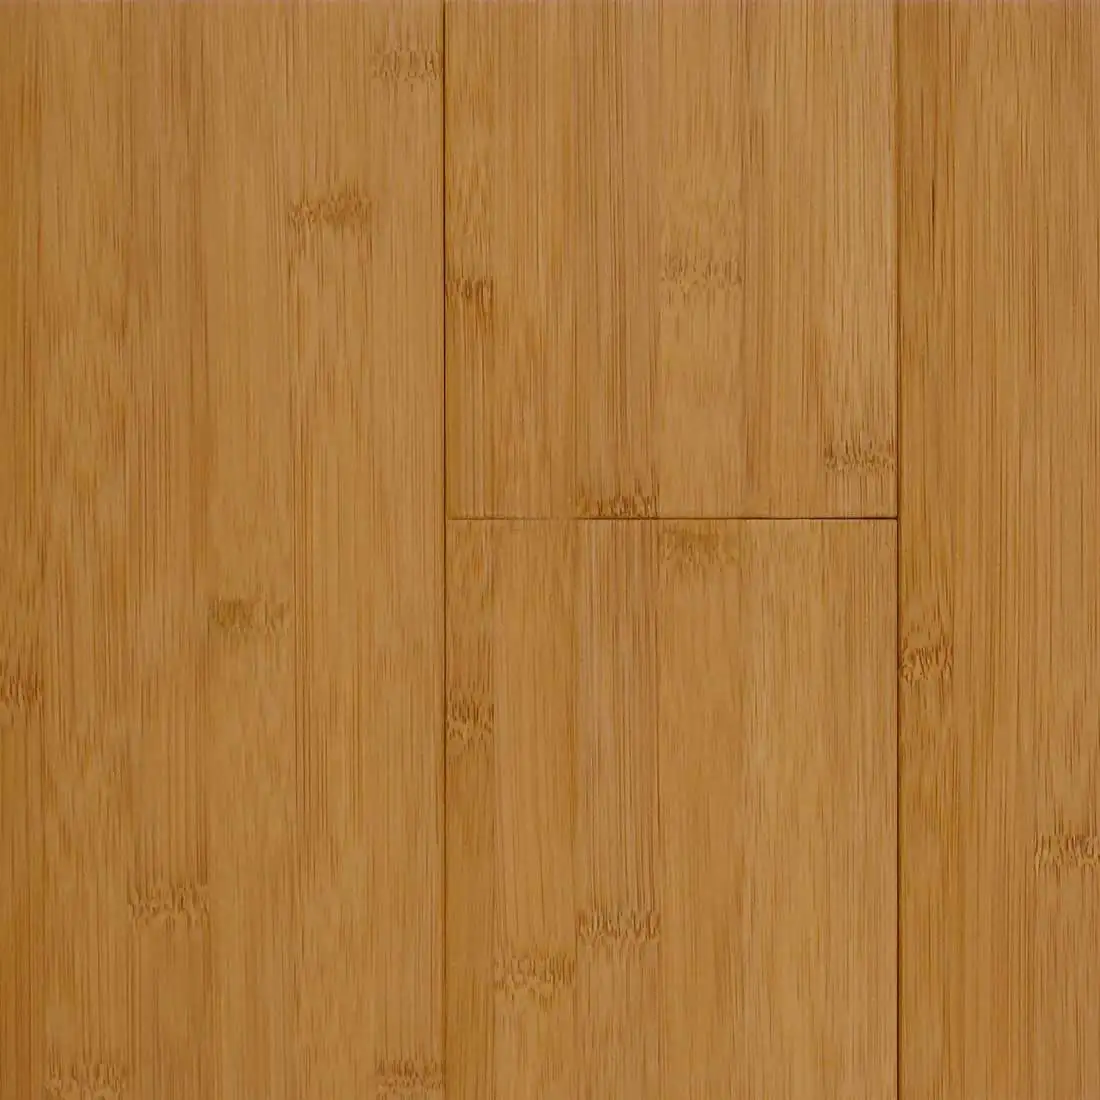 Carbonized bamboo flooring.jpg